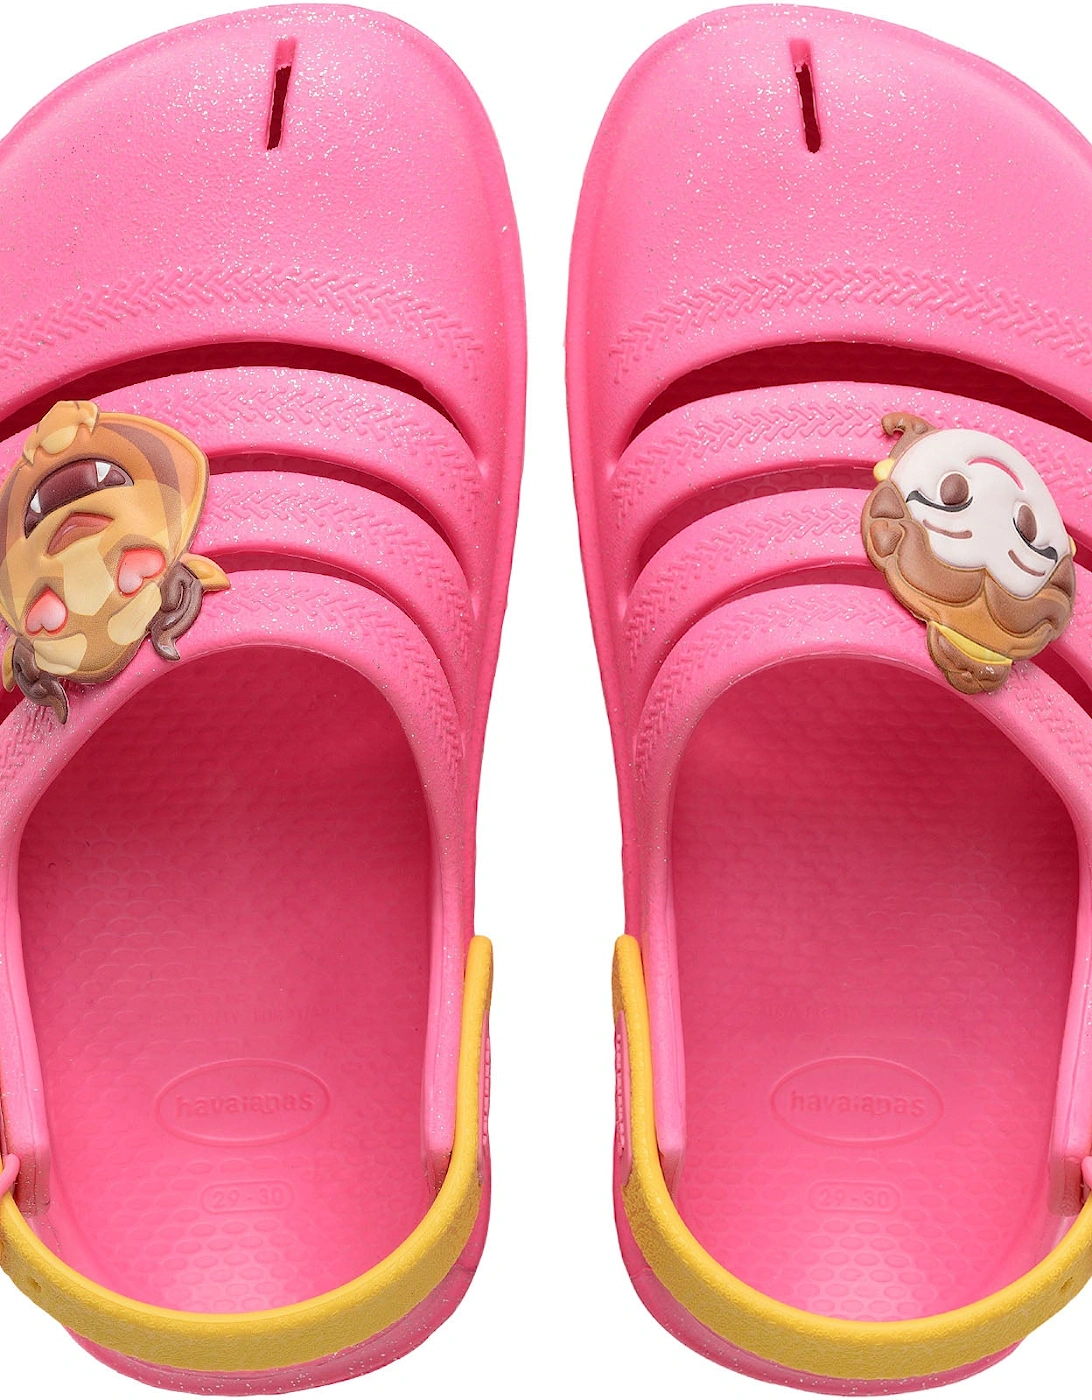 Kids Childrens Princess Rubber Clogs Shoes